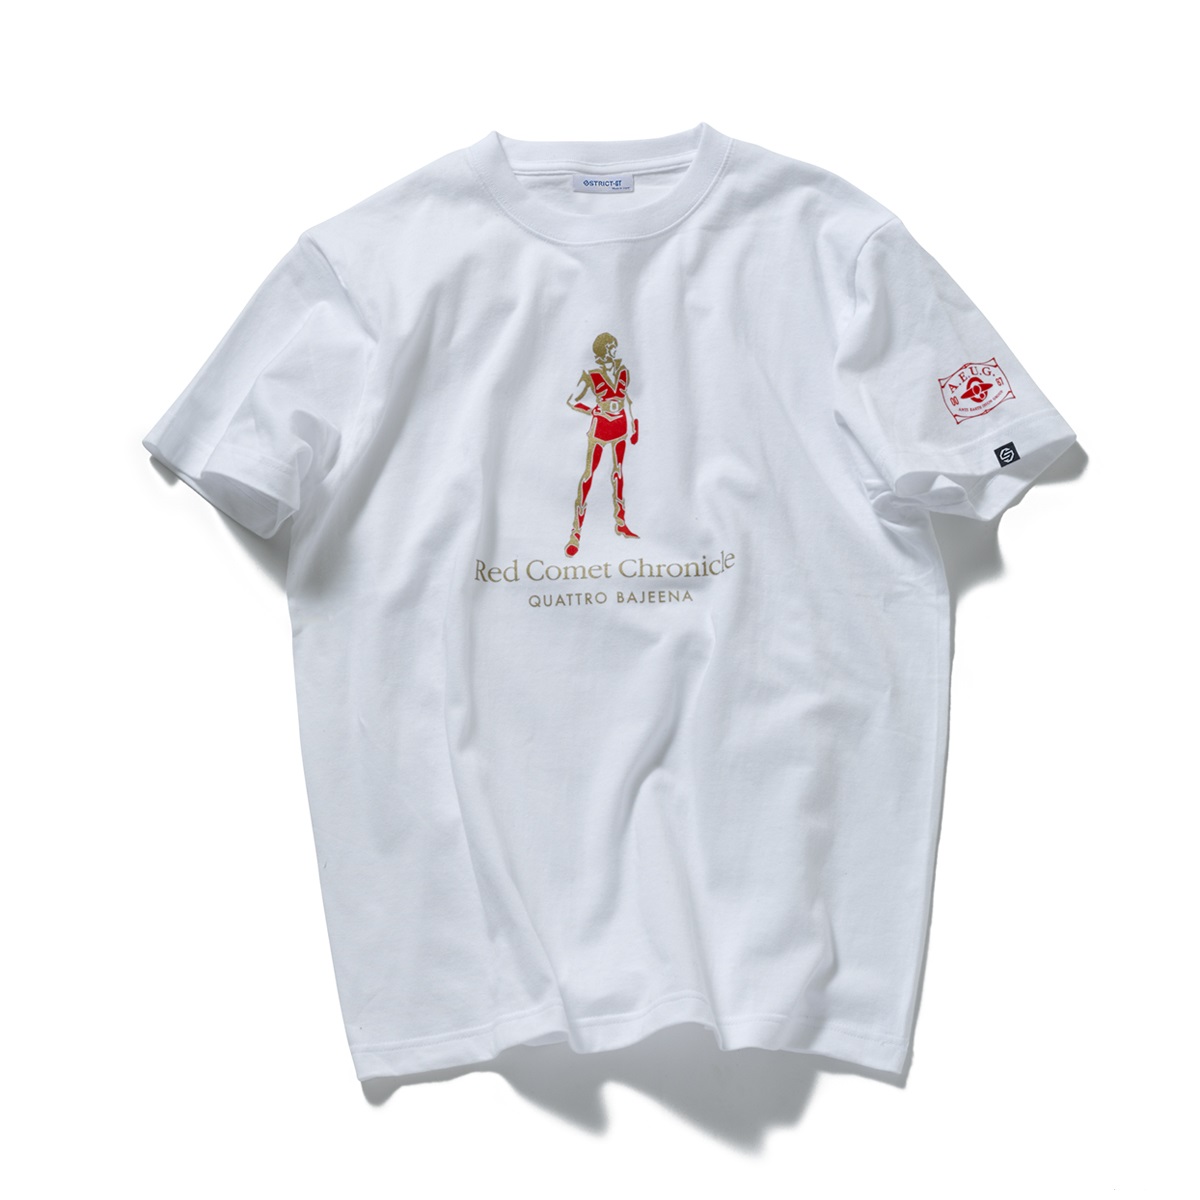 Red Comet Chronicle Quattro Bajeena T-shirt—Mobile Suit Zeta Gundam